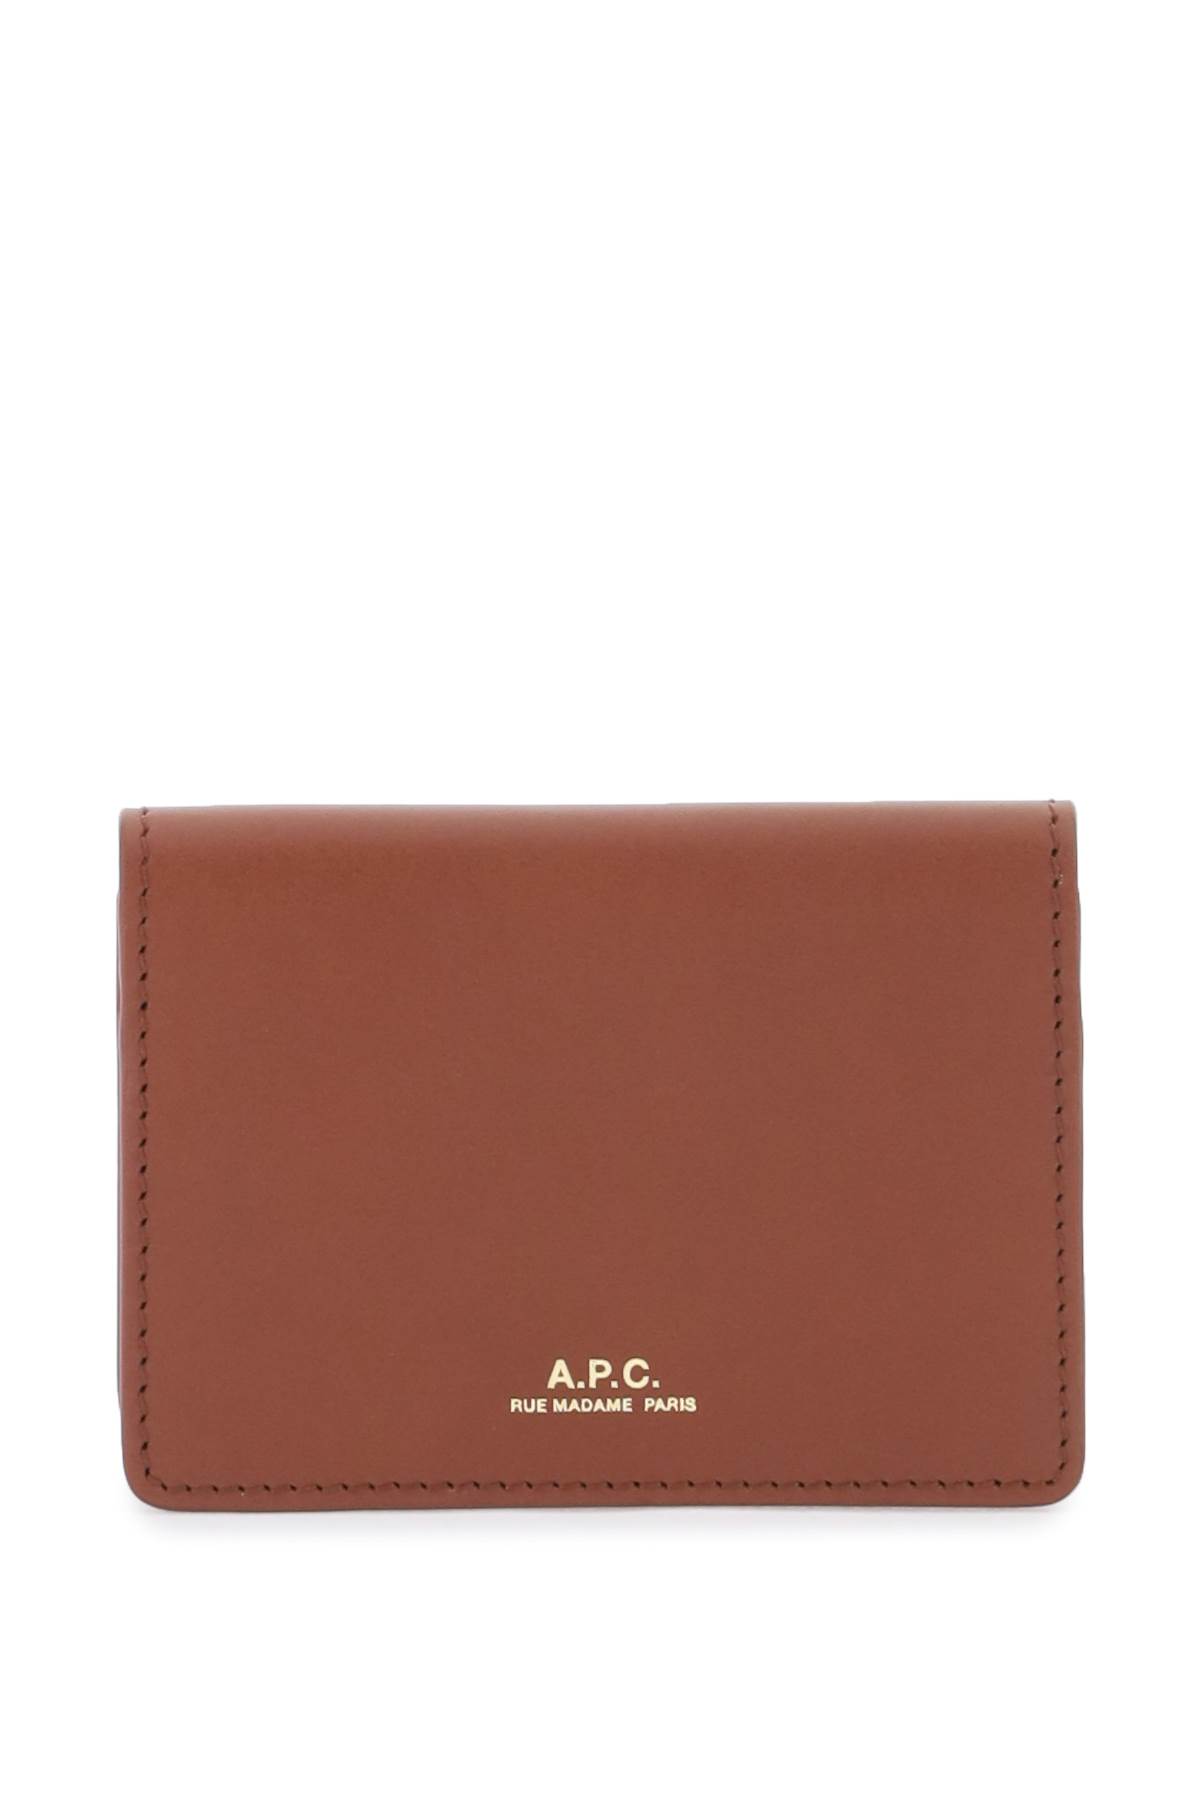 Apc Leather Stefan Card Holder In Noisette (brown)